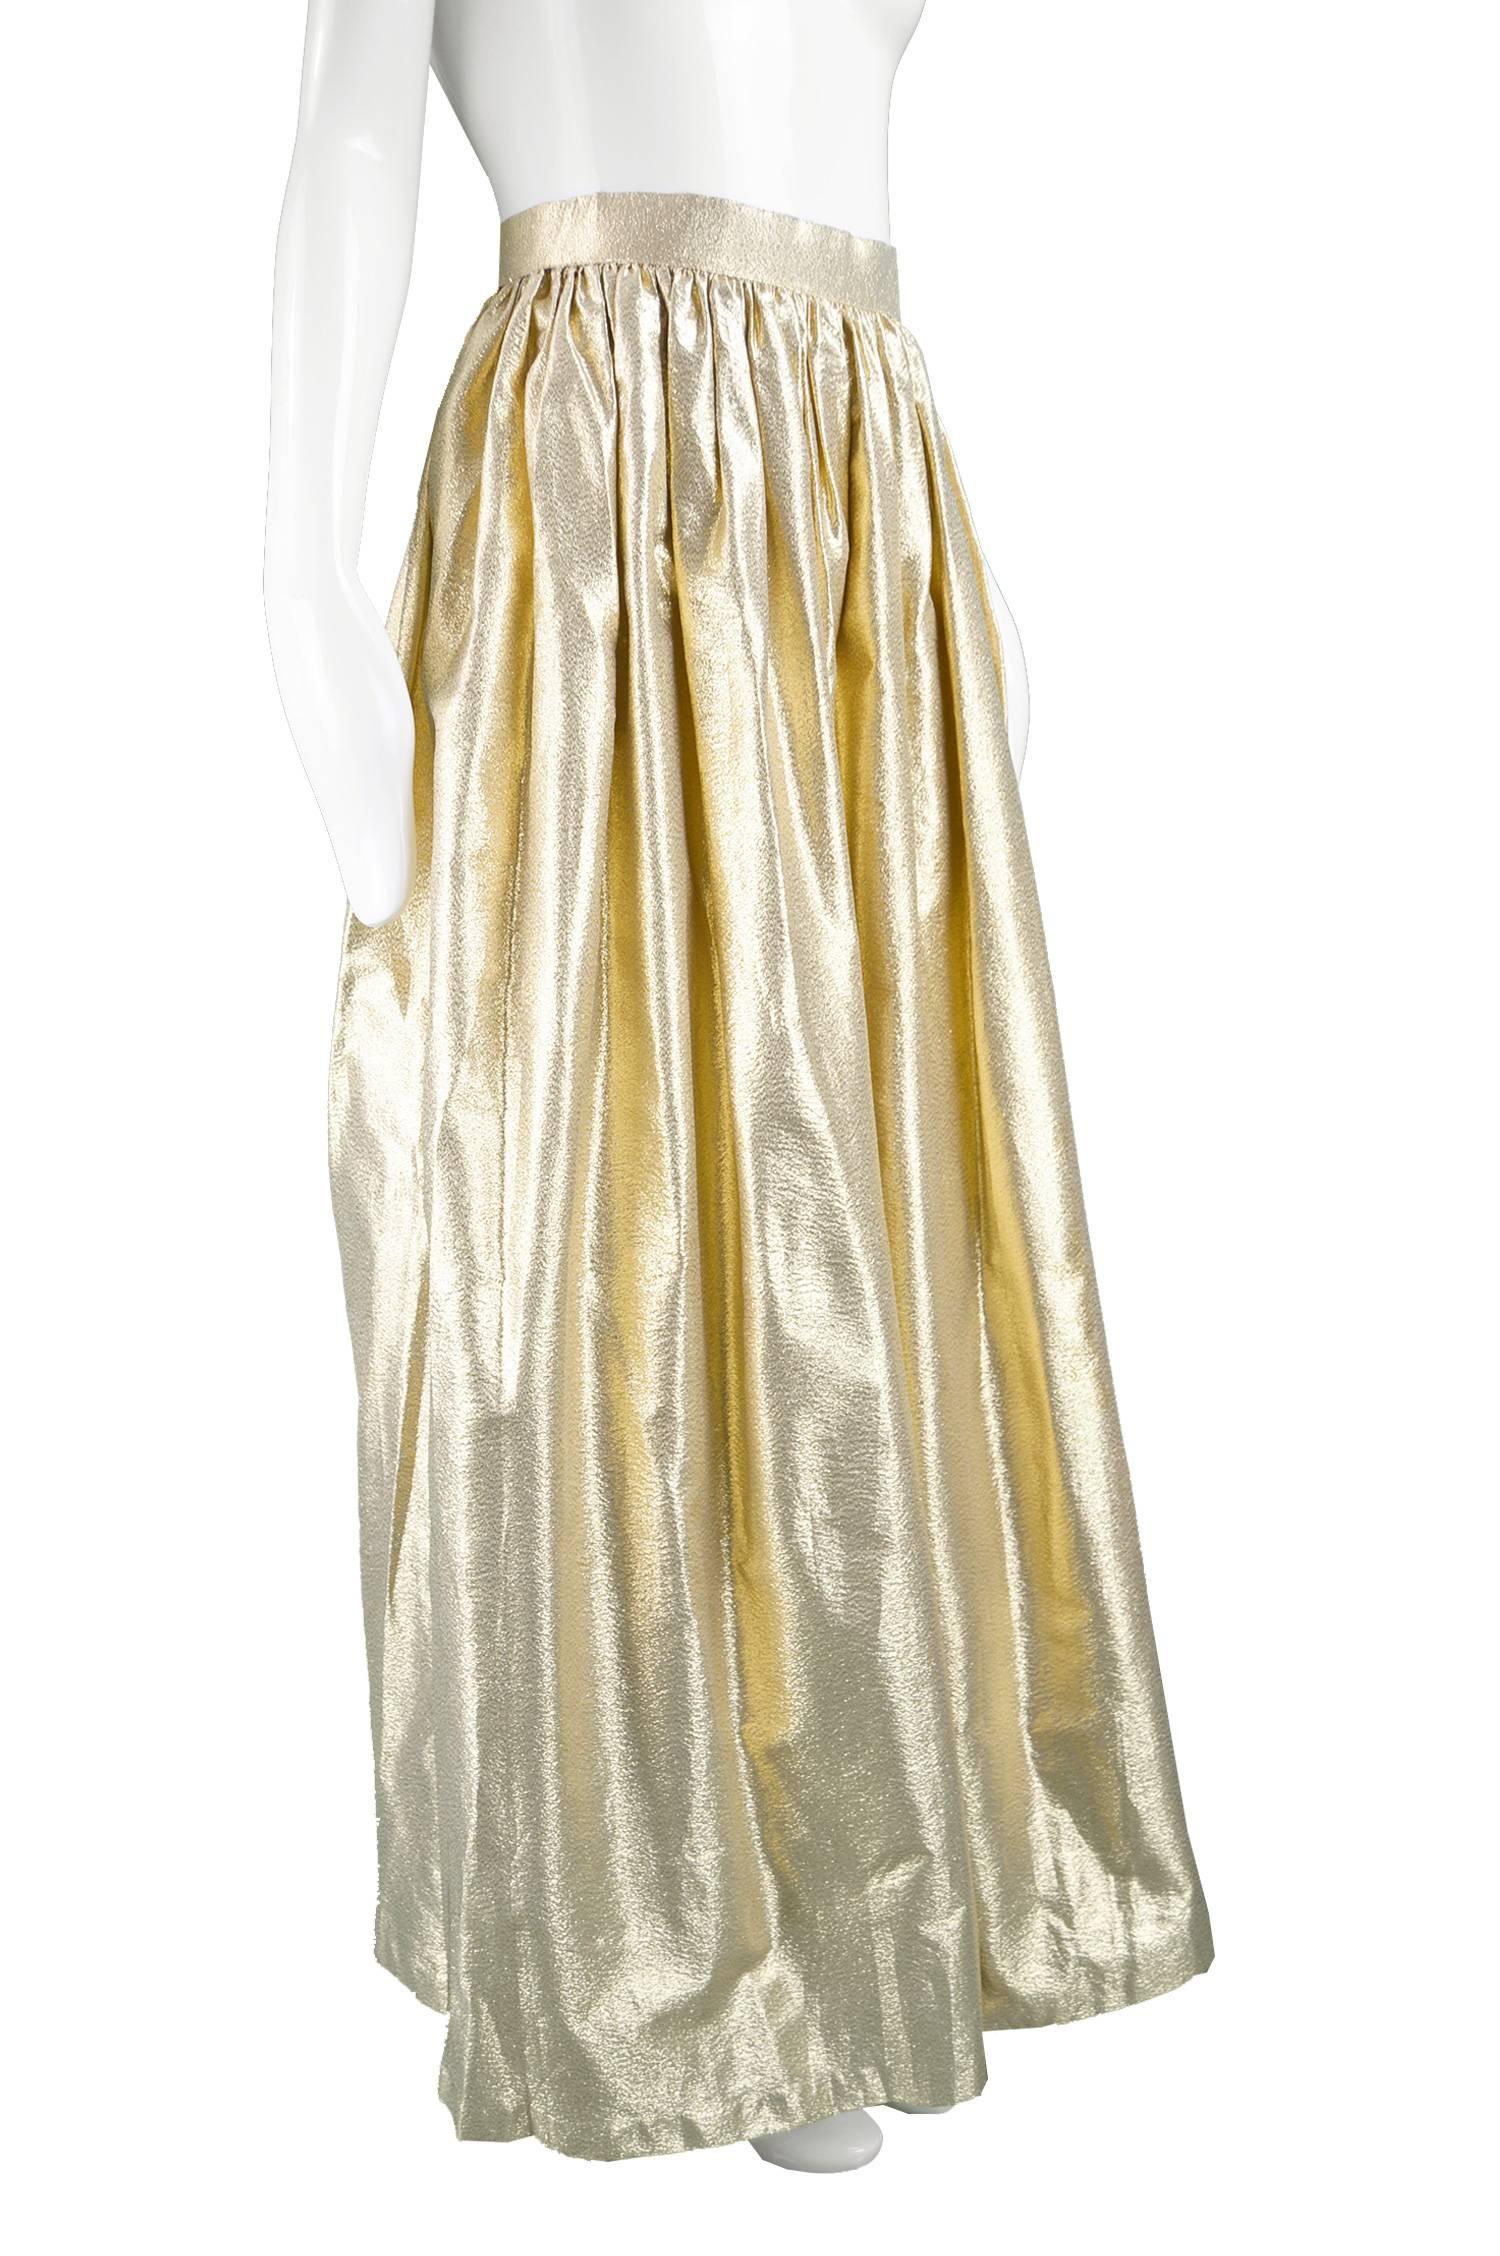 Albert Capraro Vintage Metallic Gold Lamé Maxi Skirt, 1980s 1